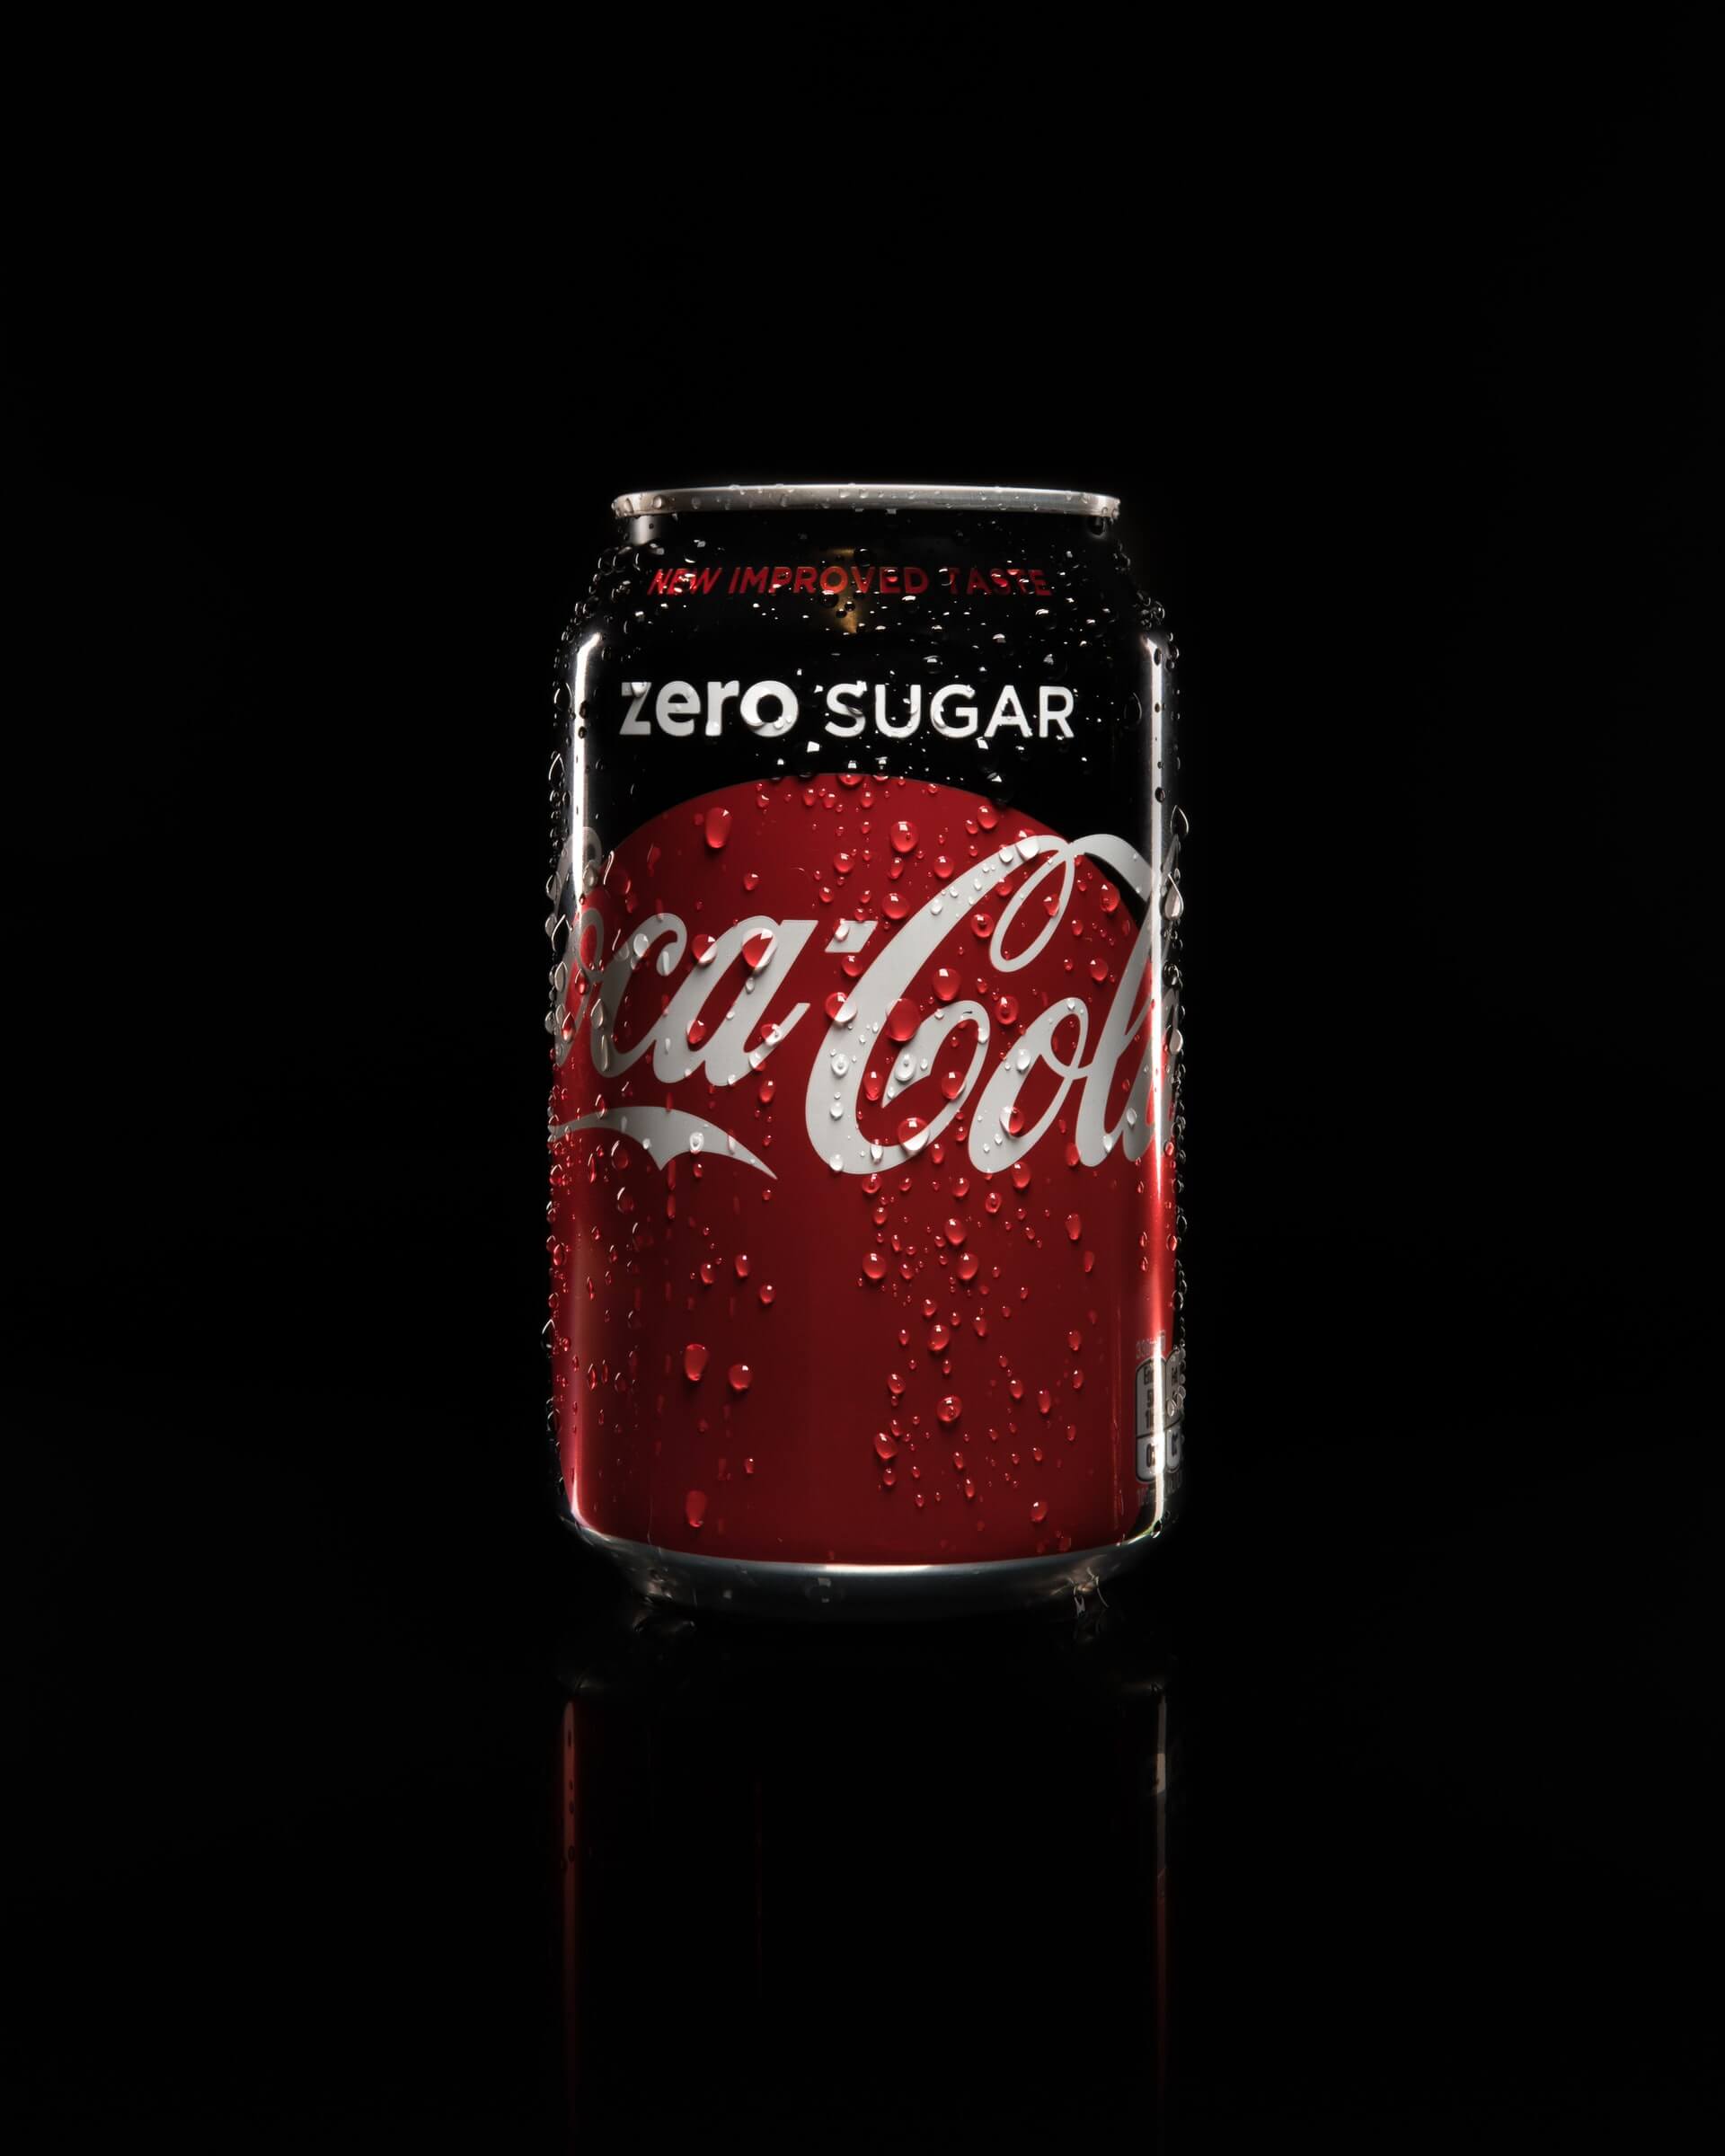 Reklamfotografering på Coca Cola i Norrköping.